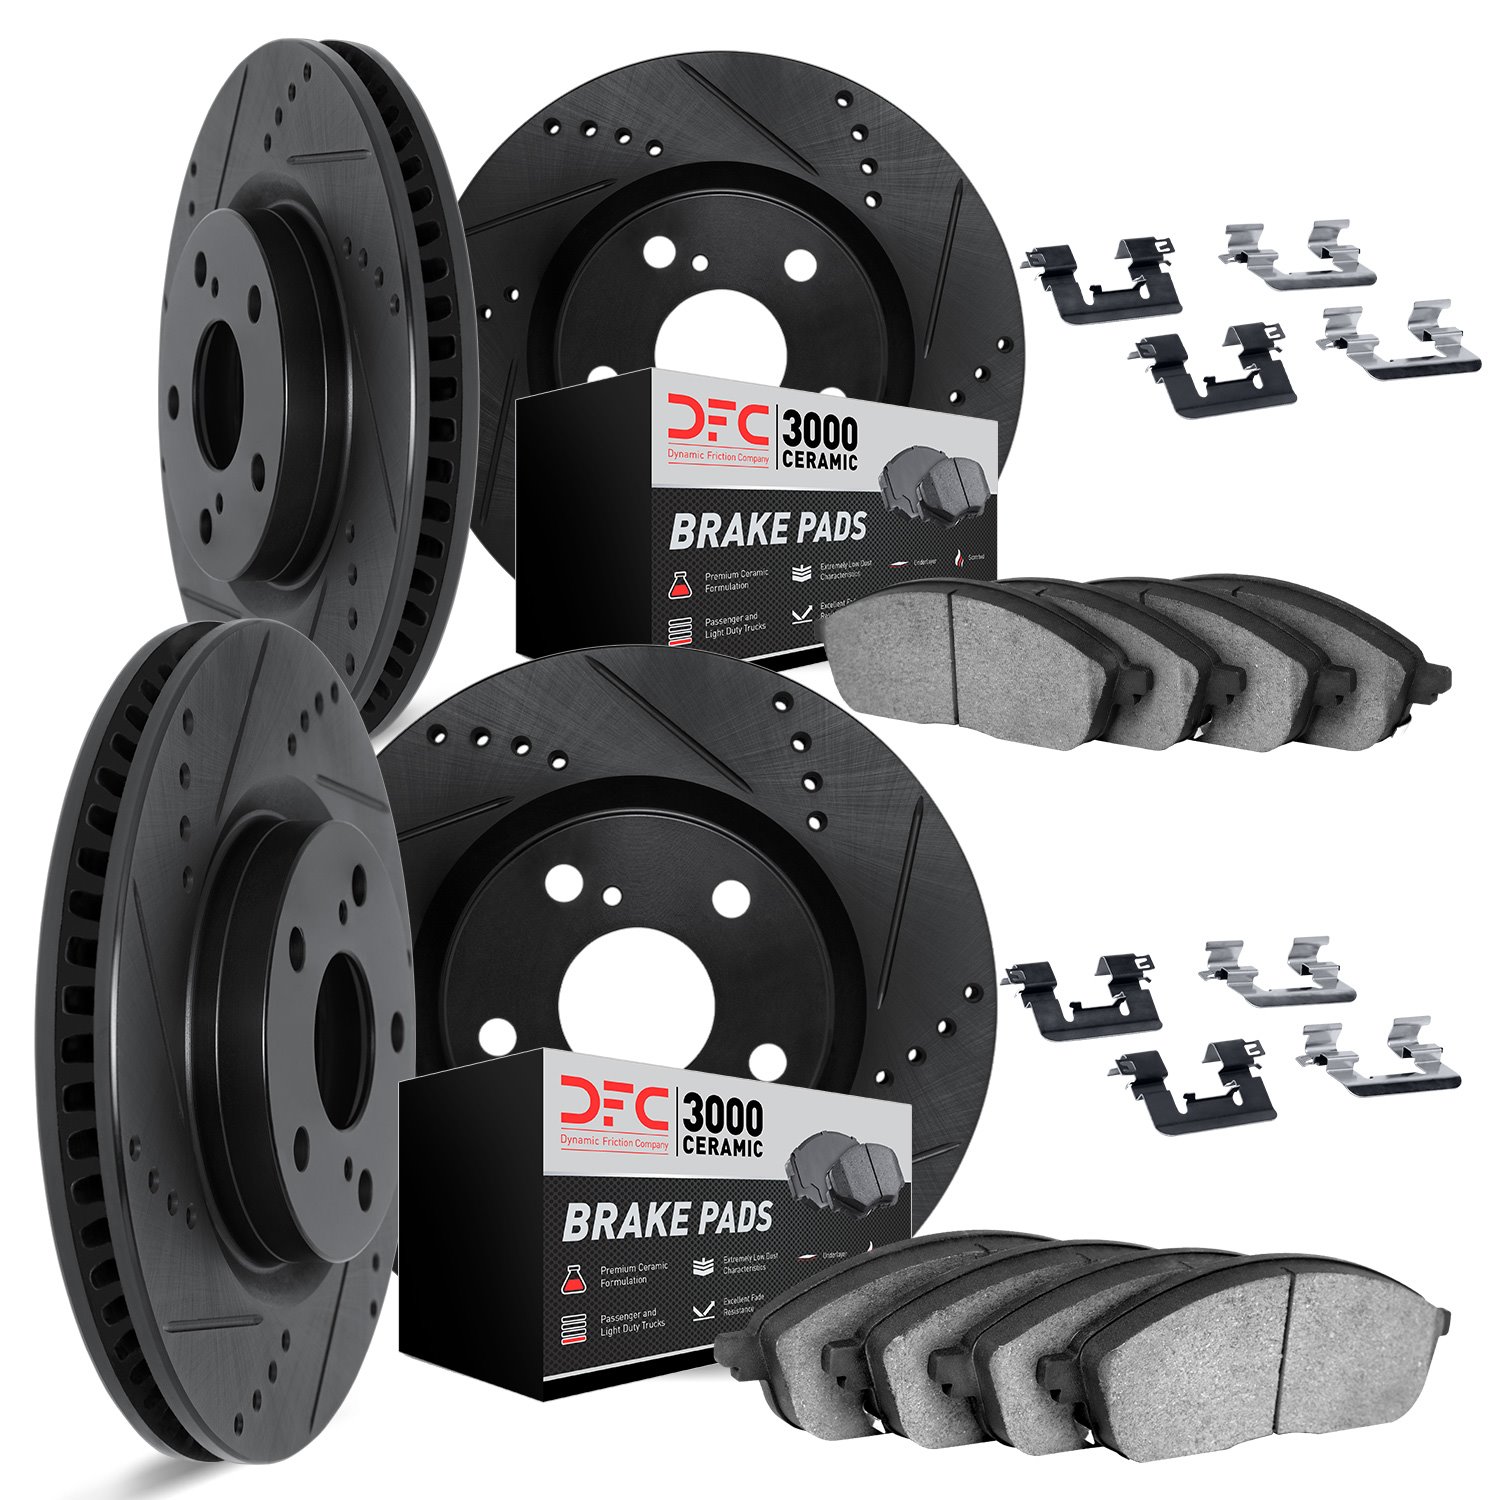 8314-67079 Drilled/Slotted Brake Rotors with 3000-Series Ceramic Brake Pads Kit & Hardware [Black], Fits Select Multiple Makes/M